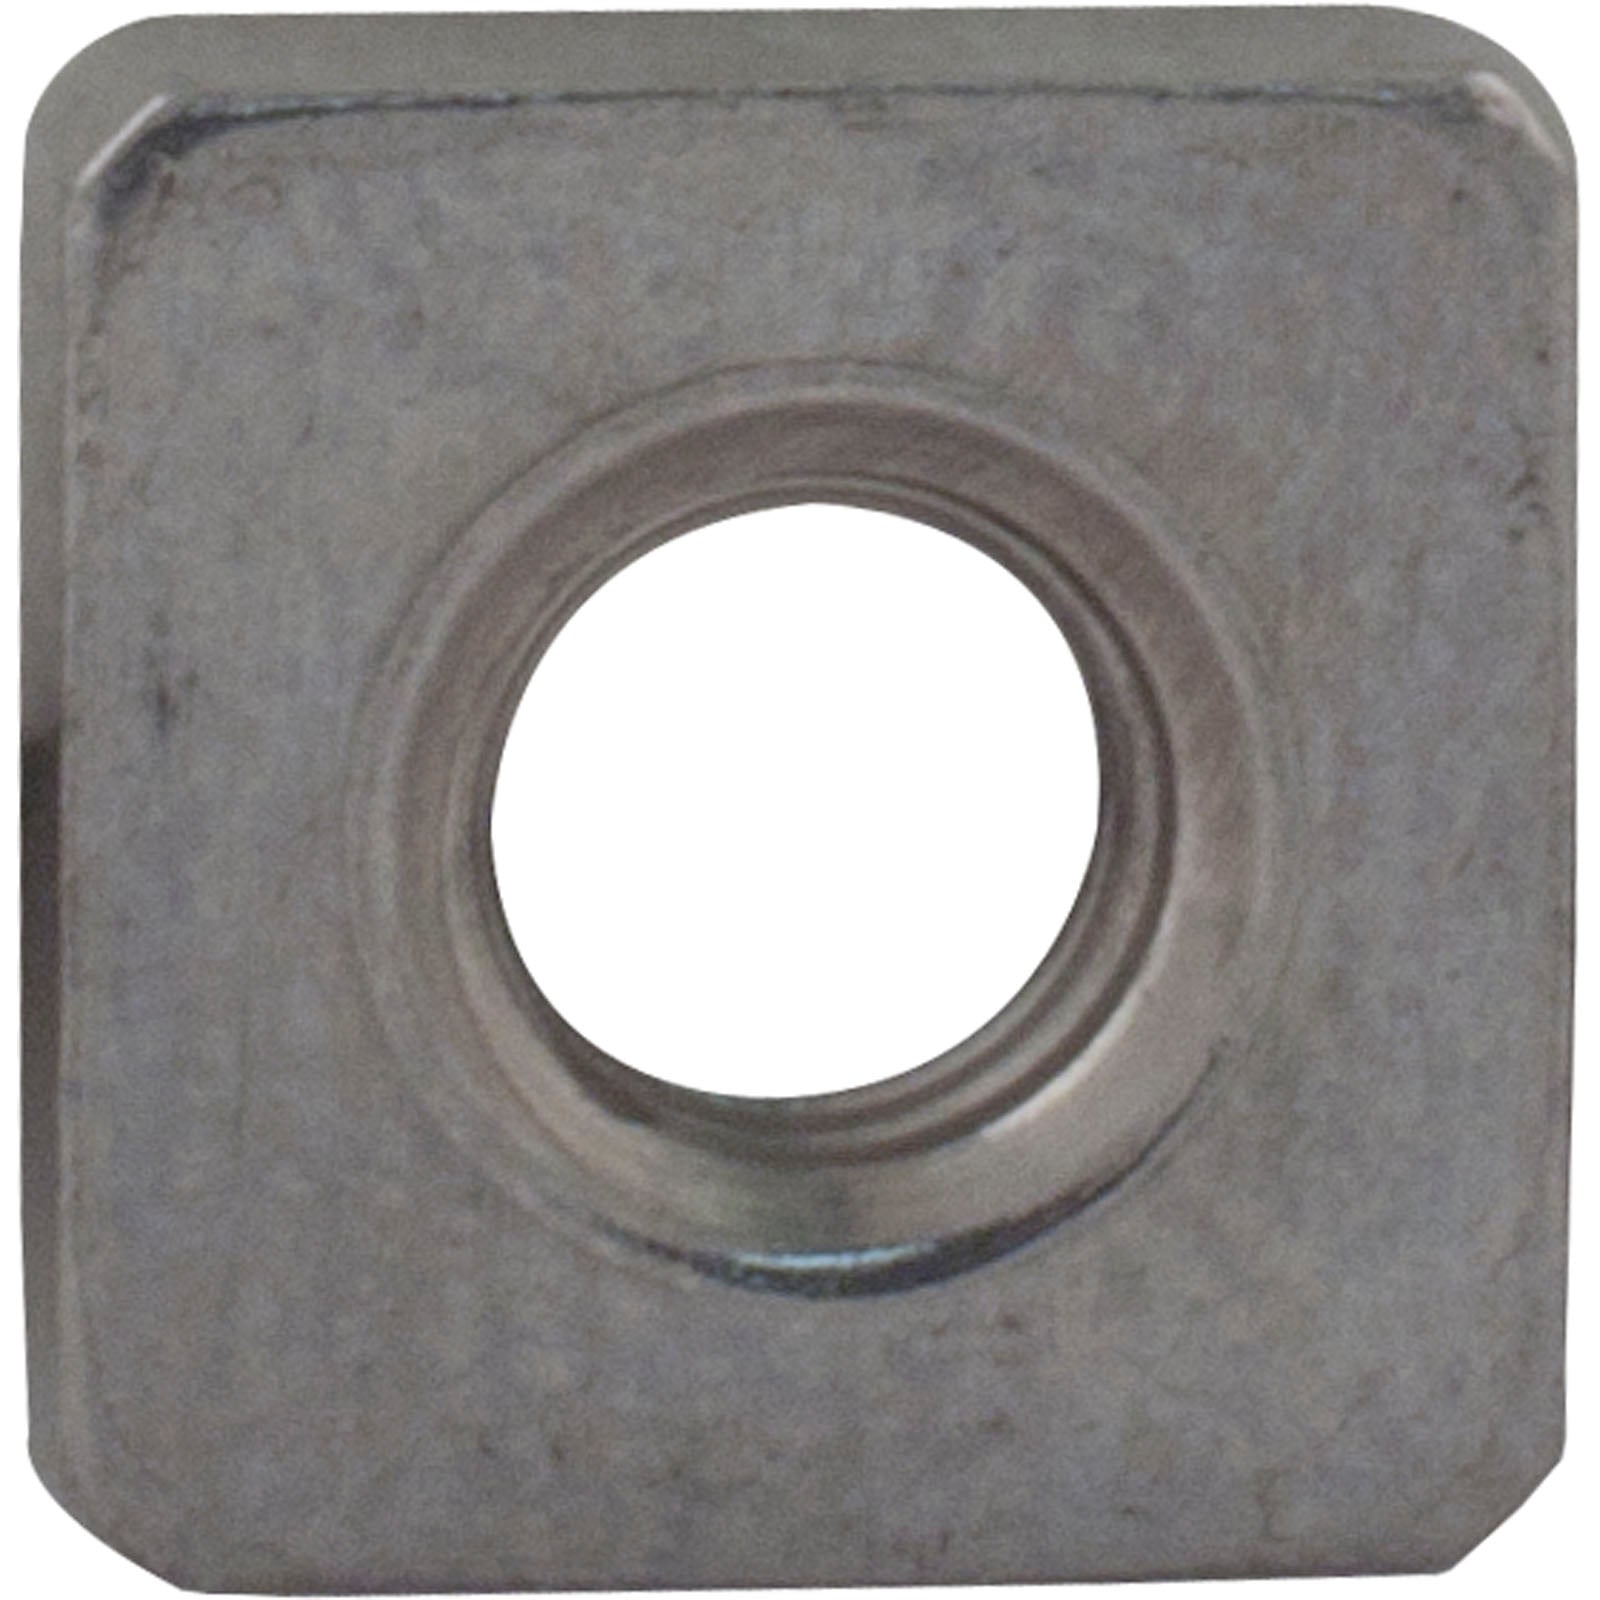 Nut Seal Plate- 354542